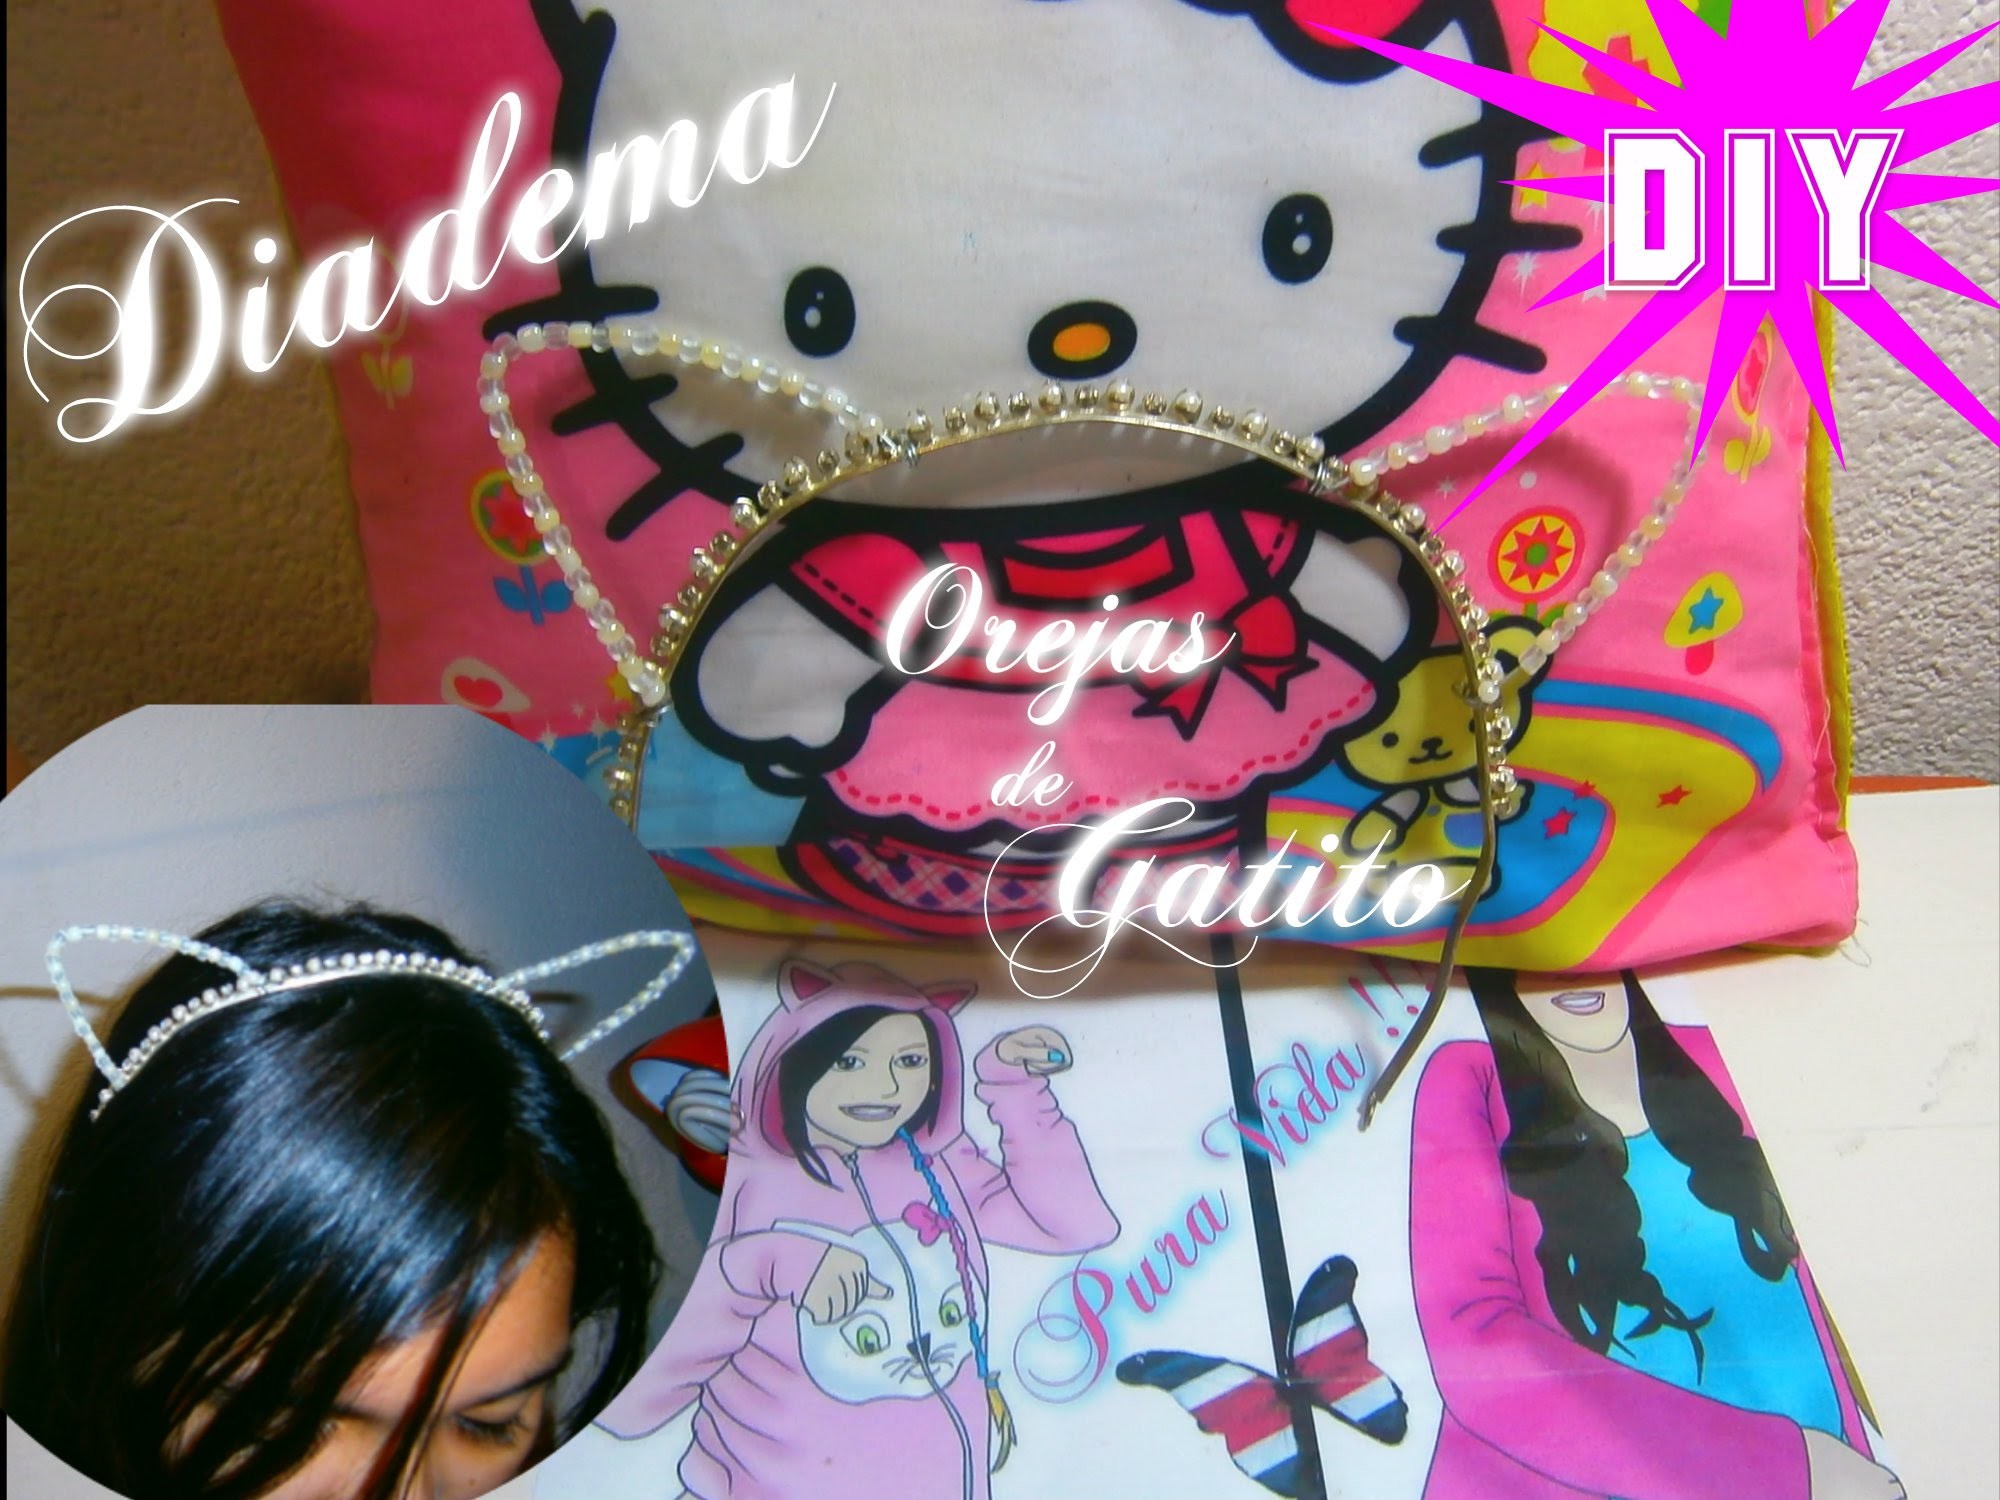 Diadema Orejas de Gatito (neko). DIY: Taylor Swift Inspired Cat Ears Headband